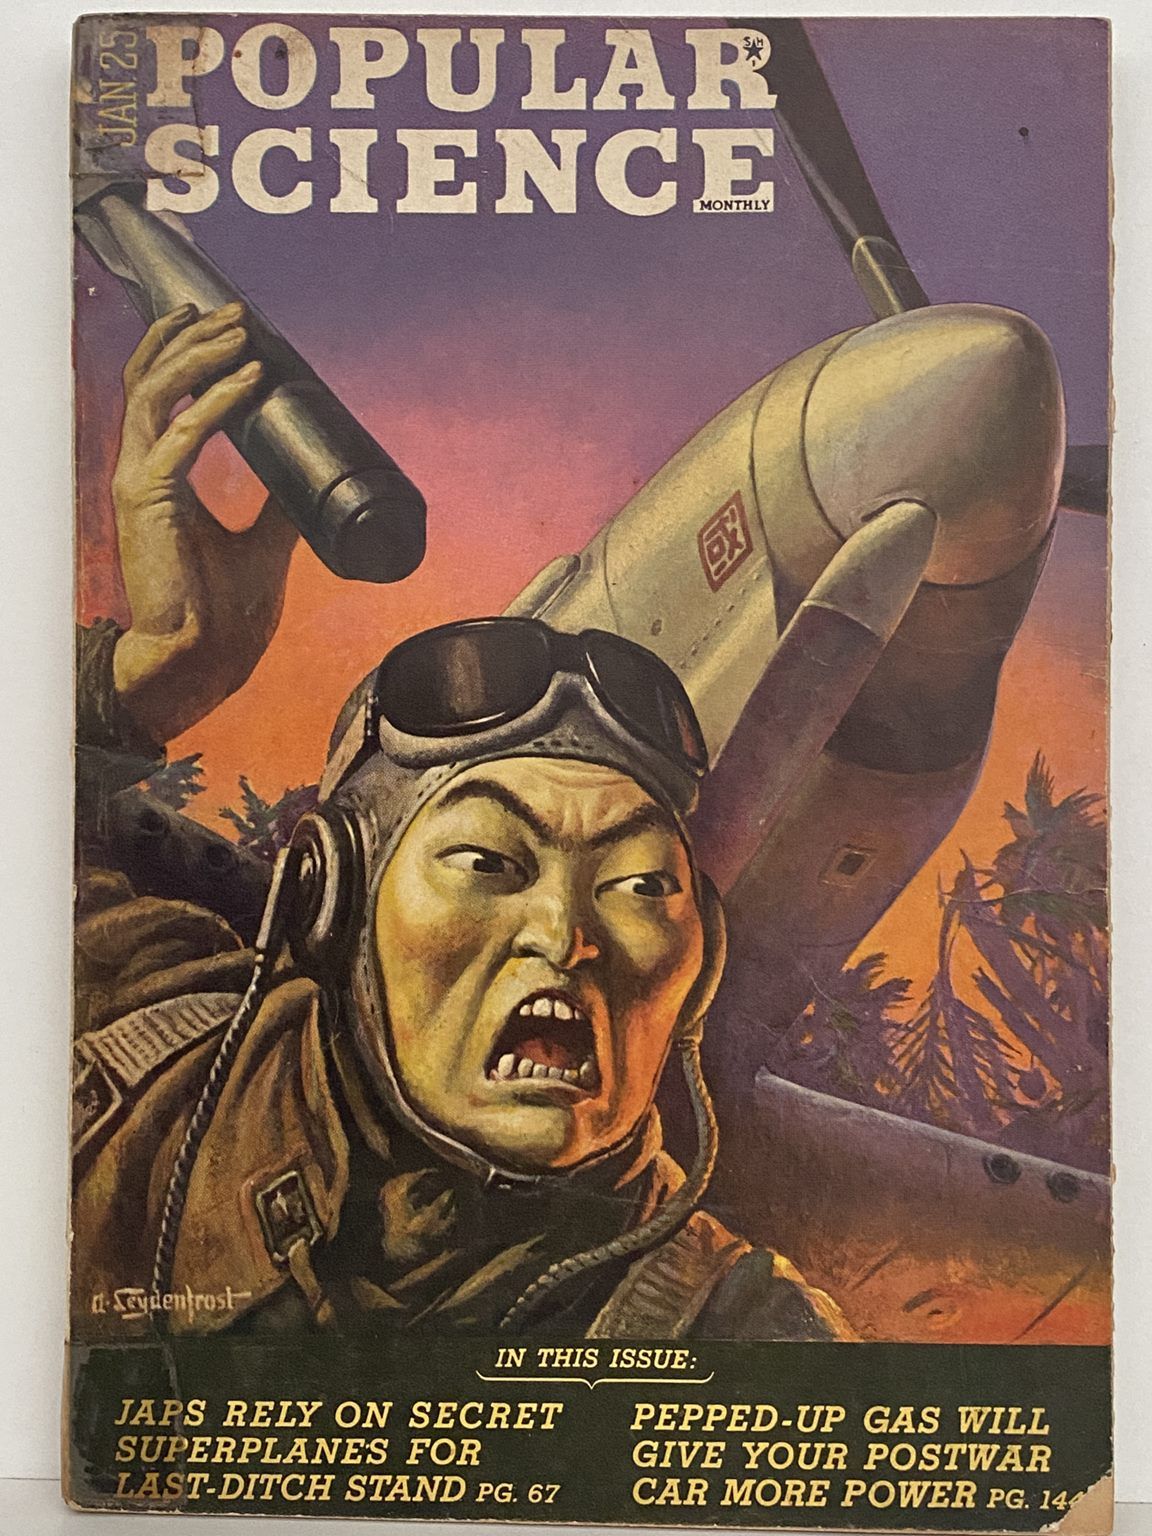 VINTAGE MAGAZINE: Popular Science, Vol. 146, No. 1 - January 1945